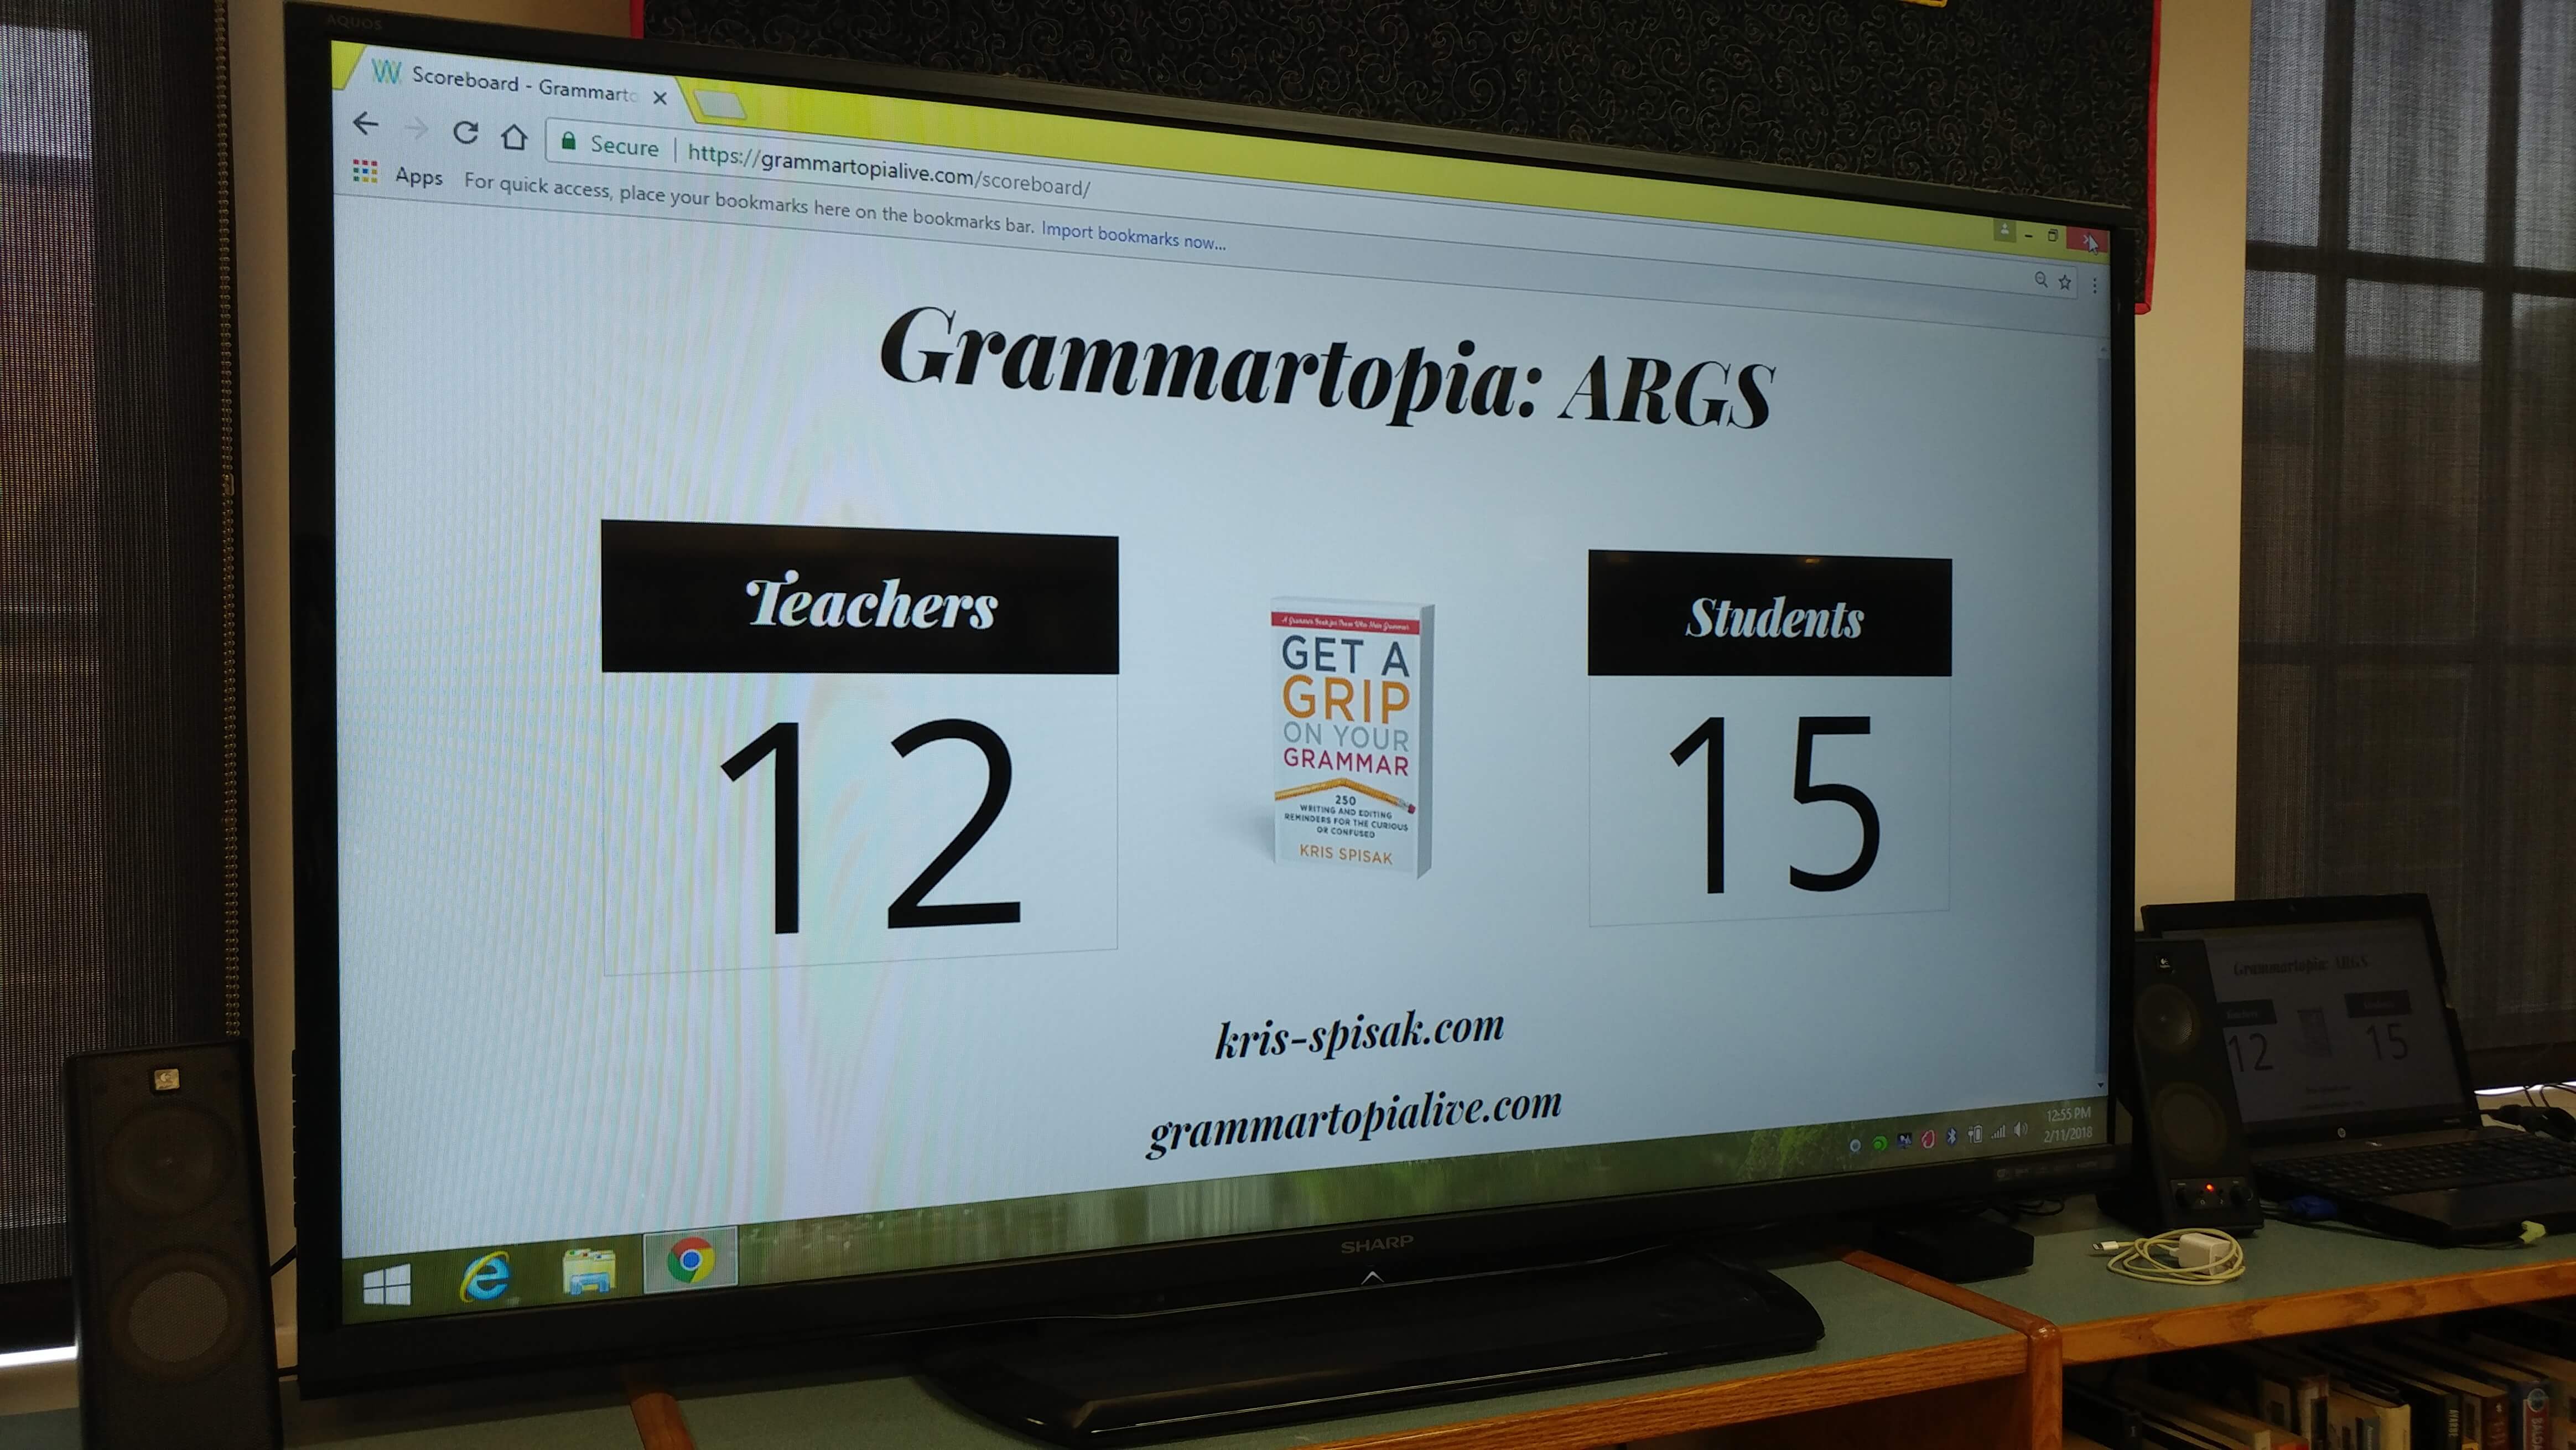 Grammartopia Grammar Game Scoreboard - Students Win